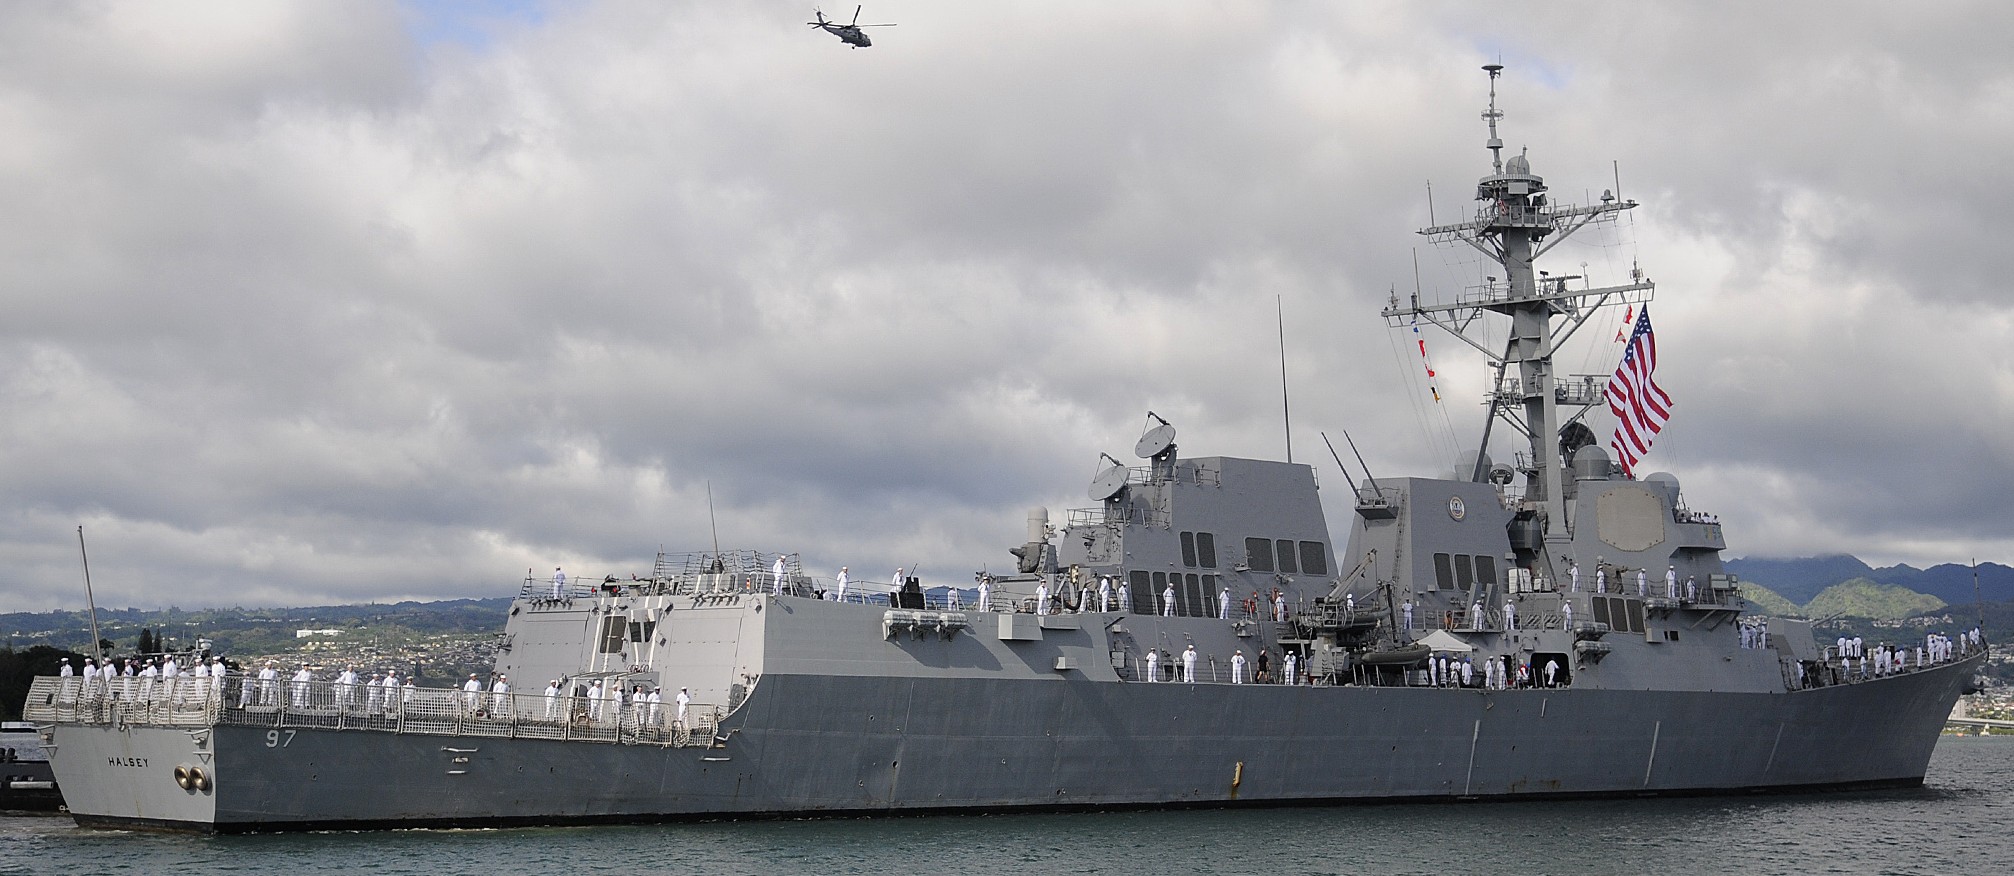 ddg-97 uss halsey arleigh burke class guided missile destroyer arriving pearl harbor hickam homeport 2013 24